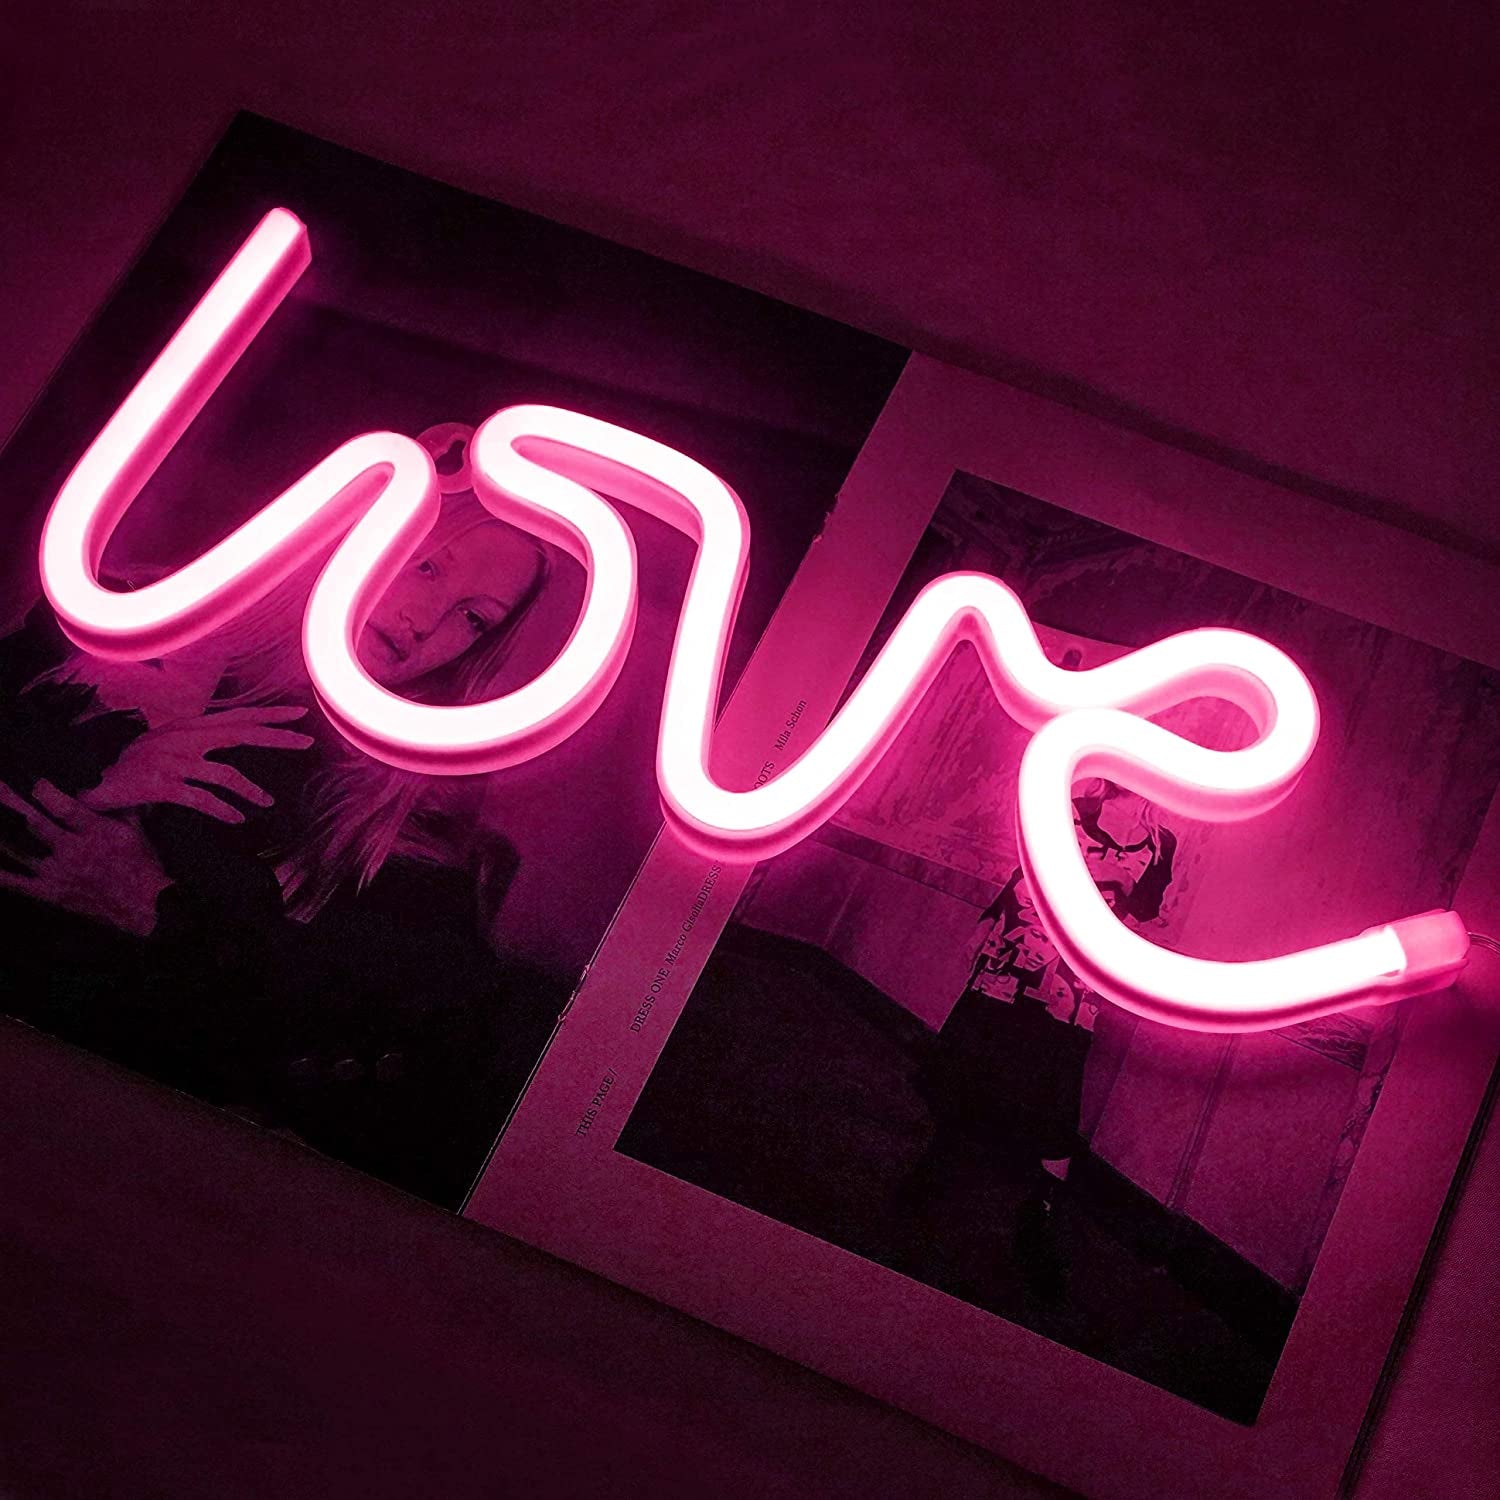 Love LED Neon Light, Usb/Battery Powered Neon Sign Lamp, Wall Decor (LOVE)